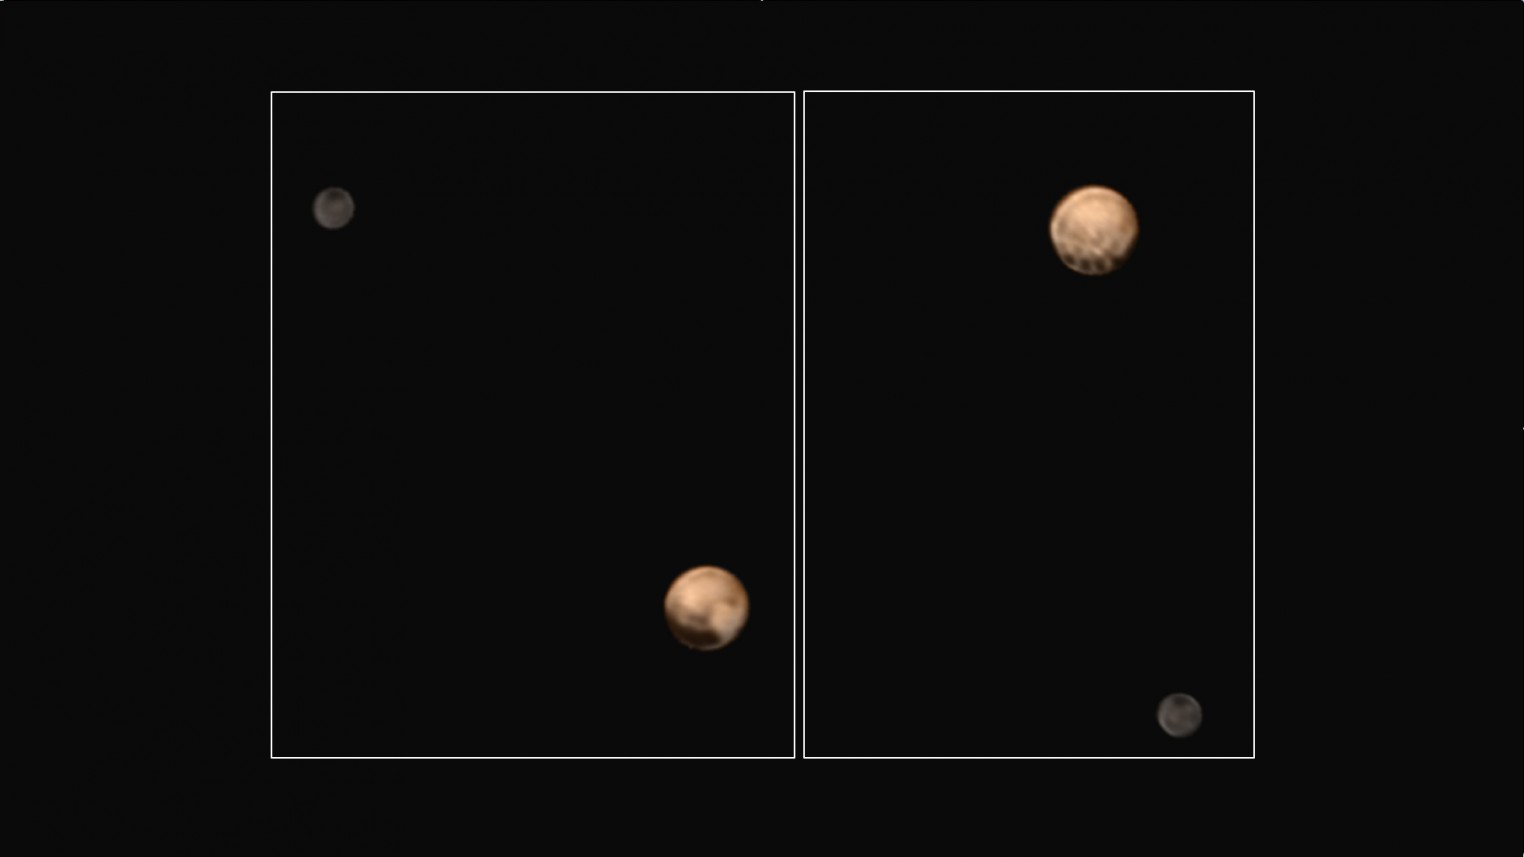 7-1-15_Pluto_Charon_color_hemispheres_unannotated_JHUAPL_NASA_SWRI